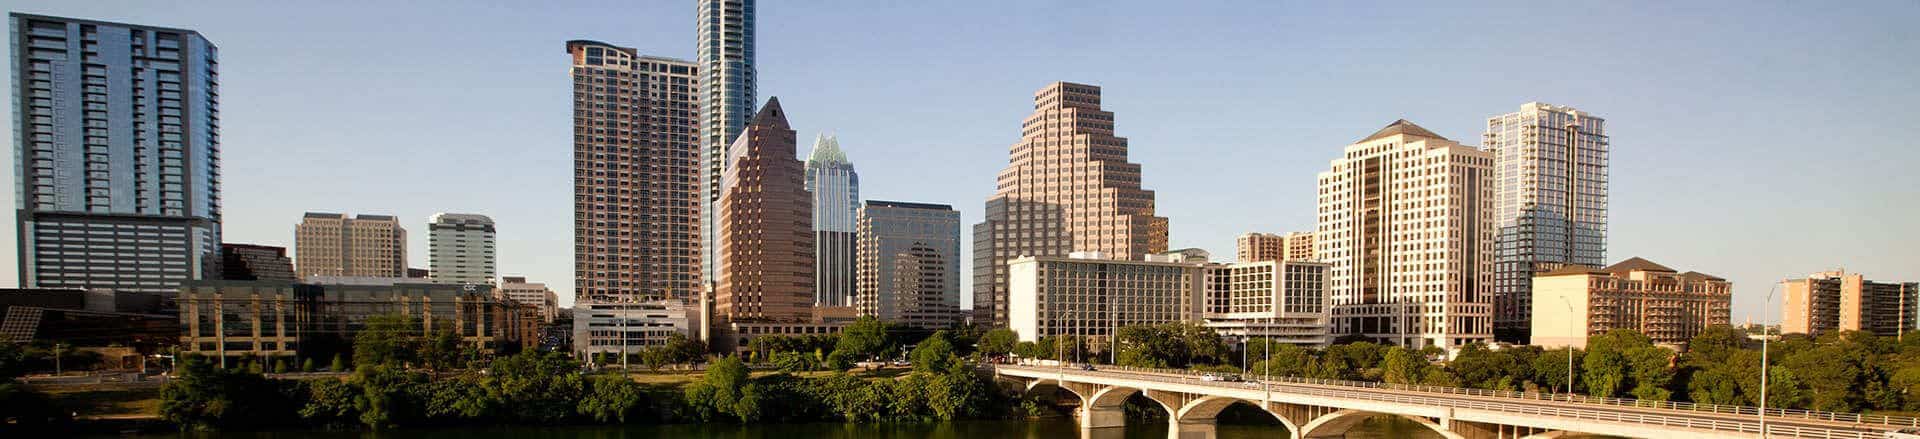 Hair transplant options in Austin, Texas